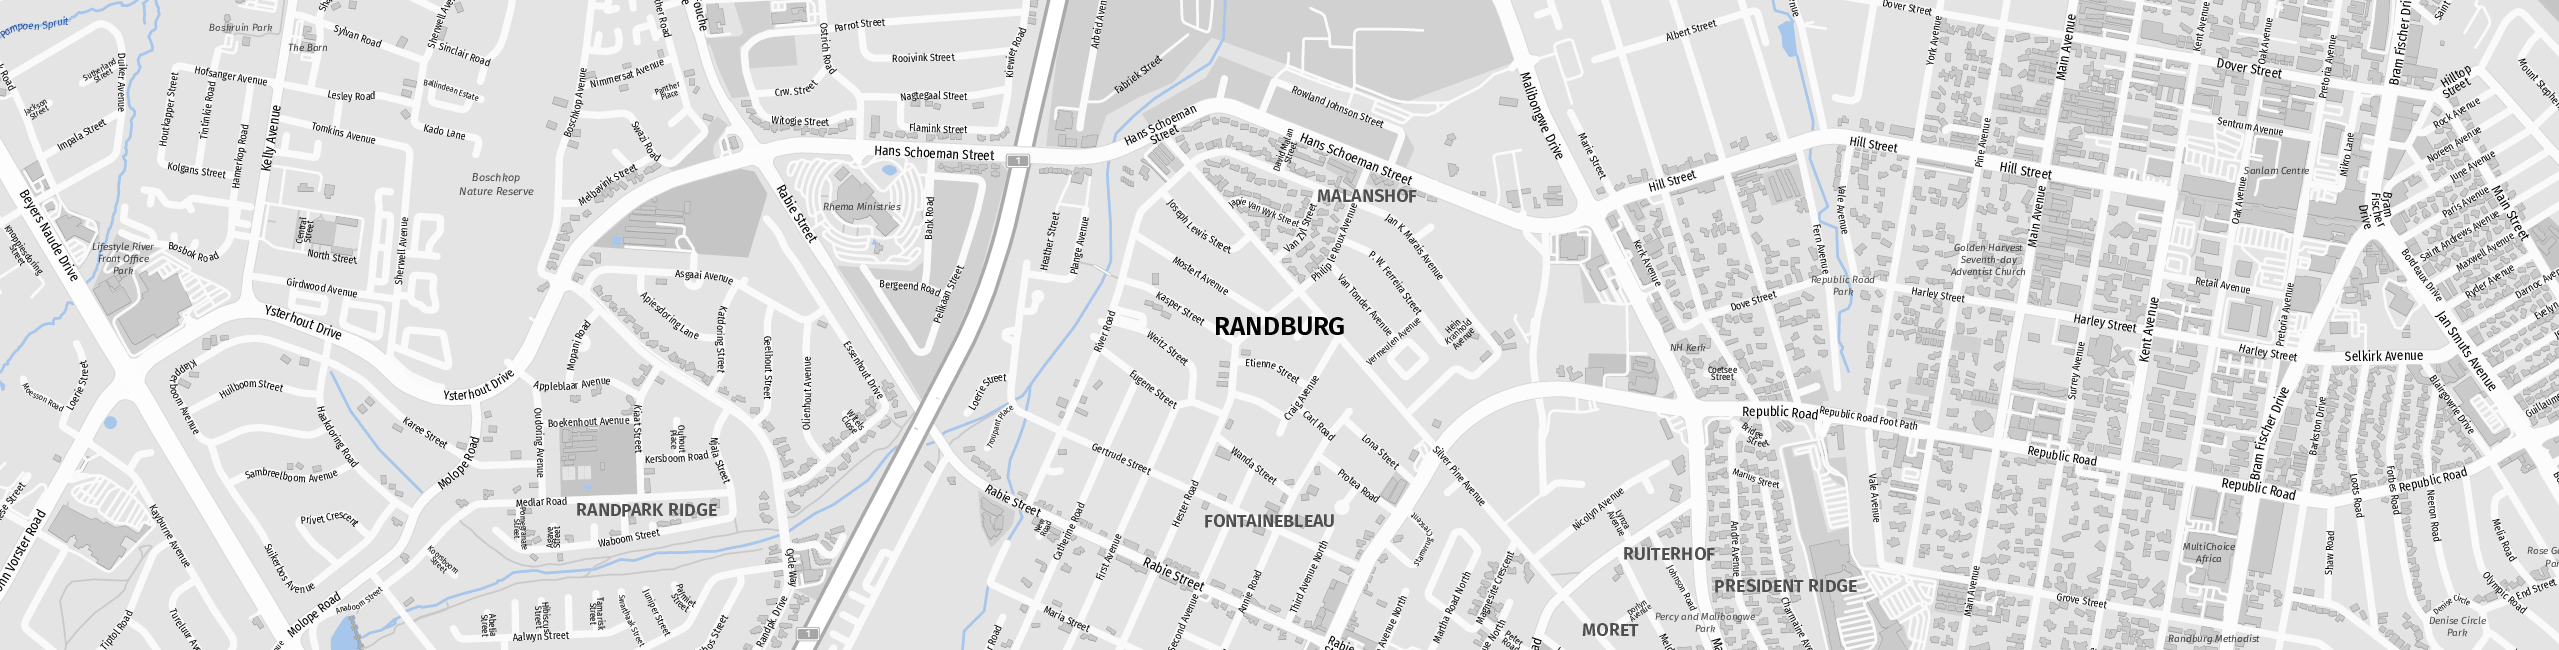 Stadtplan Randburg zum Downloaden.